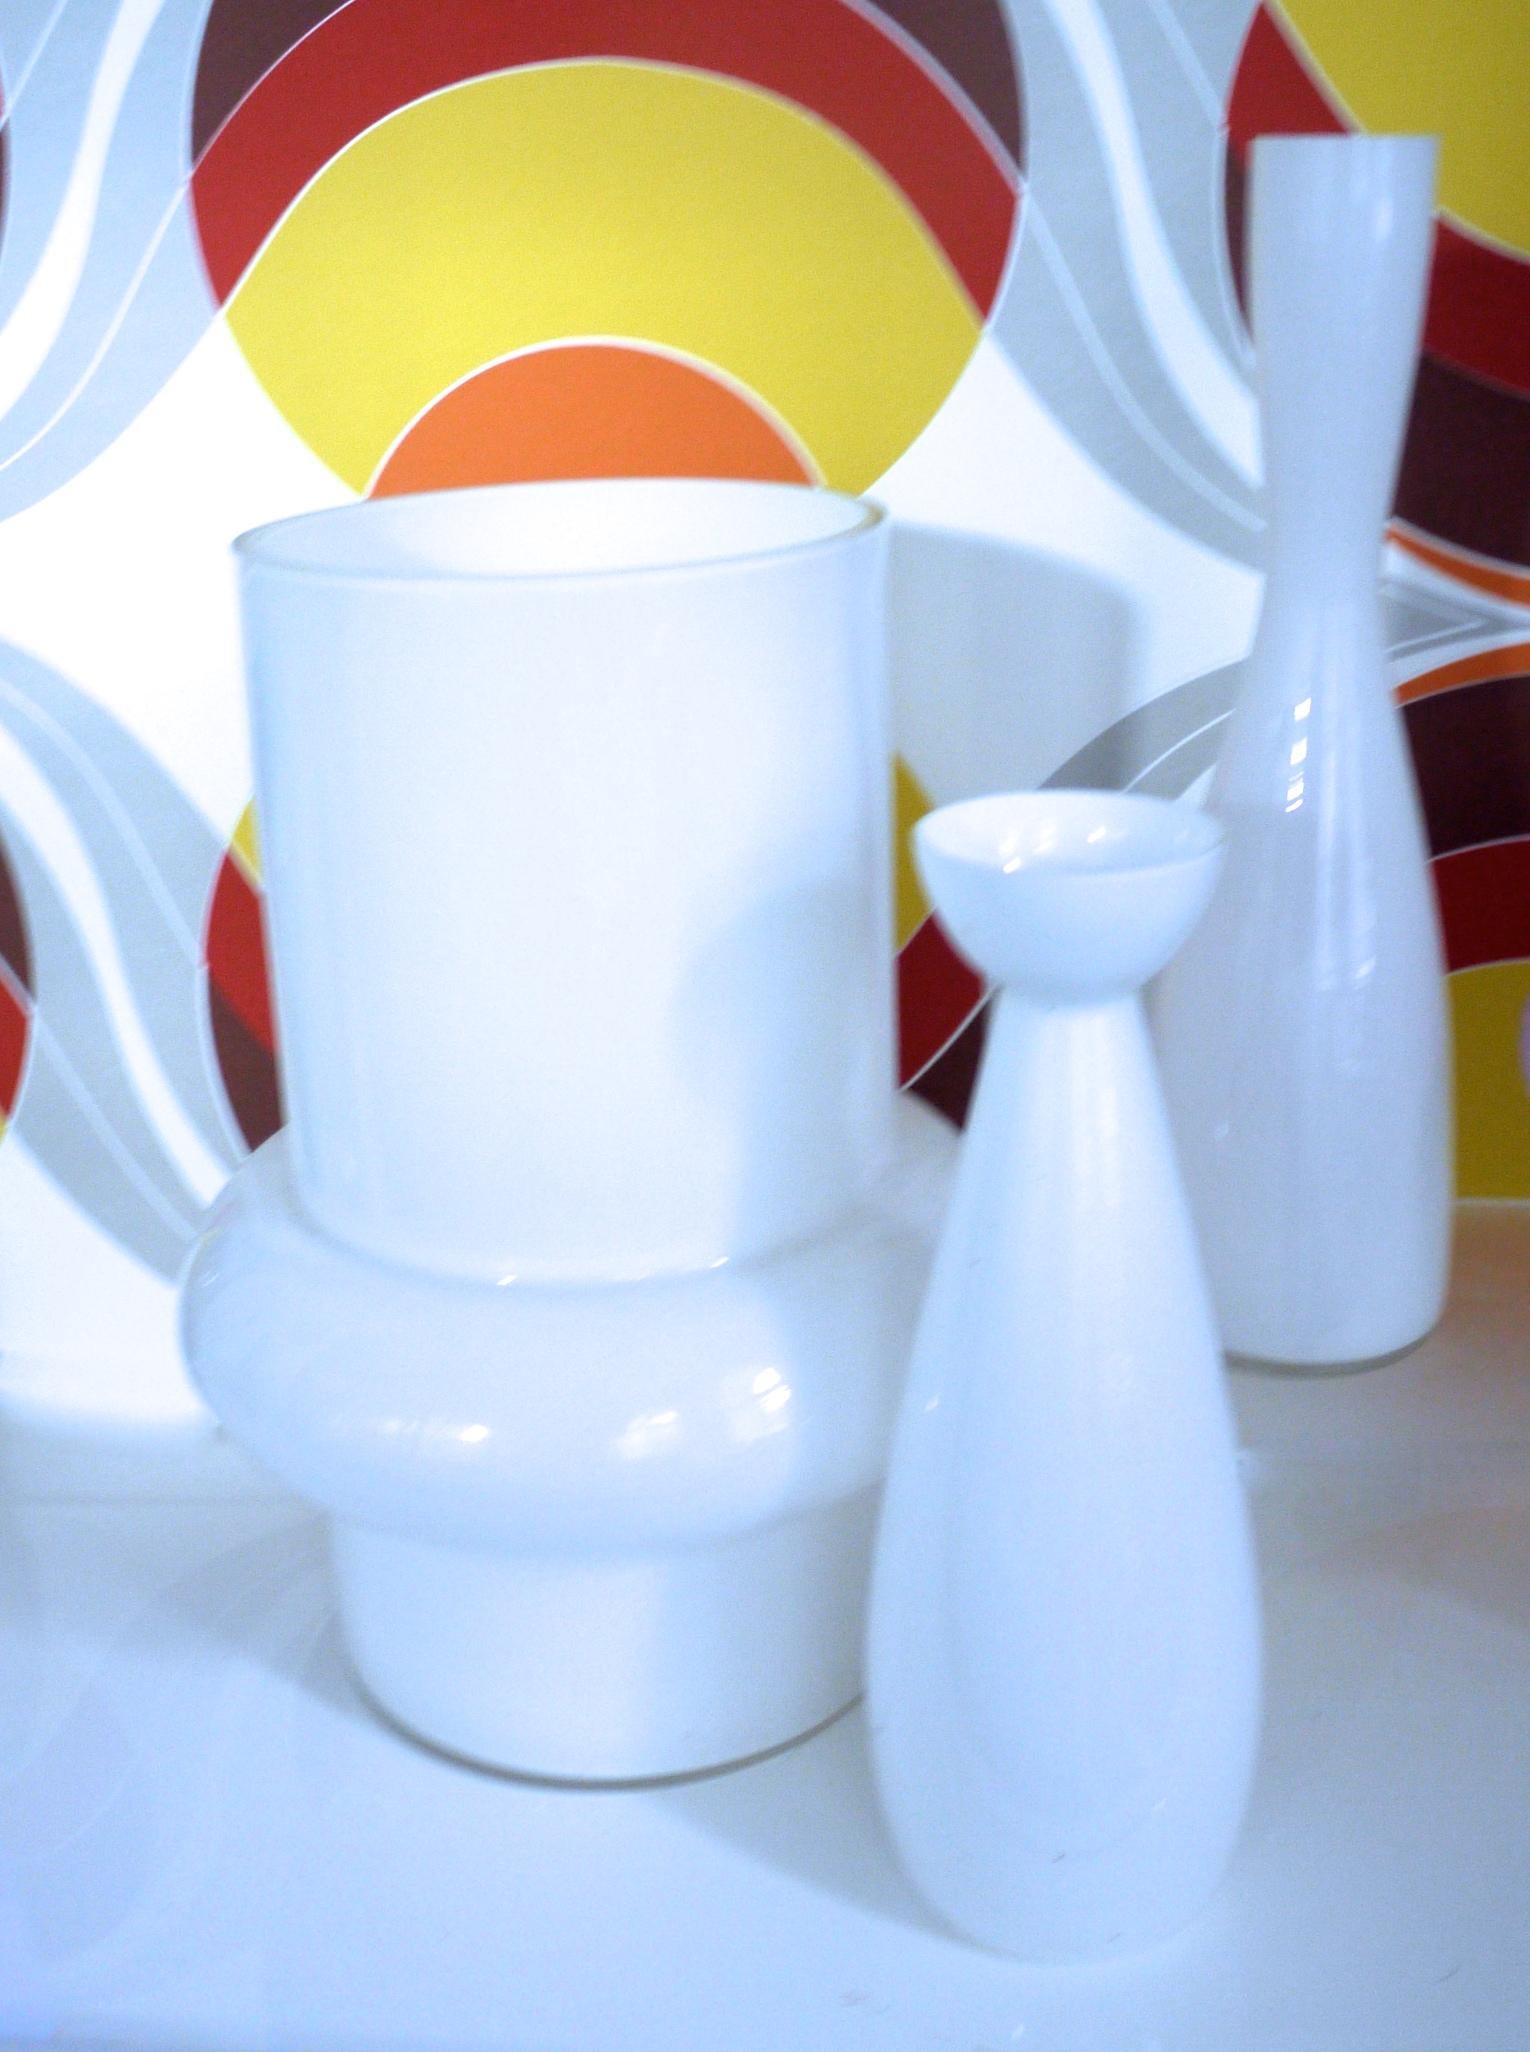 Modernist Scandinavian/Murano Space Age white glass vases from late 1950s-1960s - Scandinavian Modernist/Space Age white glass vases from late 1950s. 

Measures: Large hooped vase - Vistosi
Height 32 cms
Diameter 16 cms
Diameter at widest